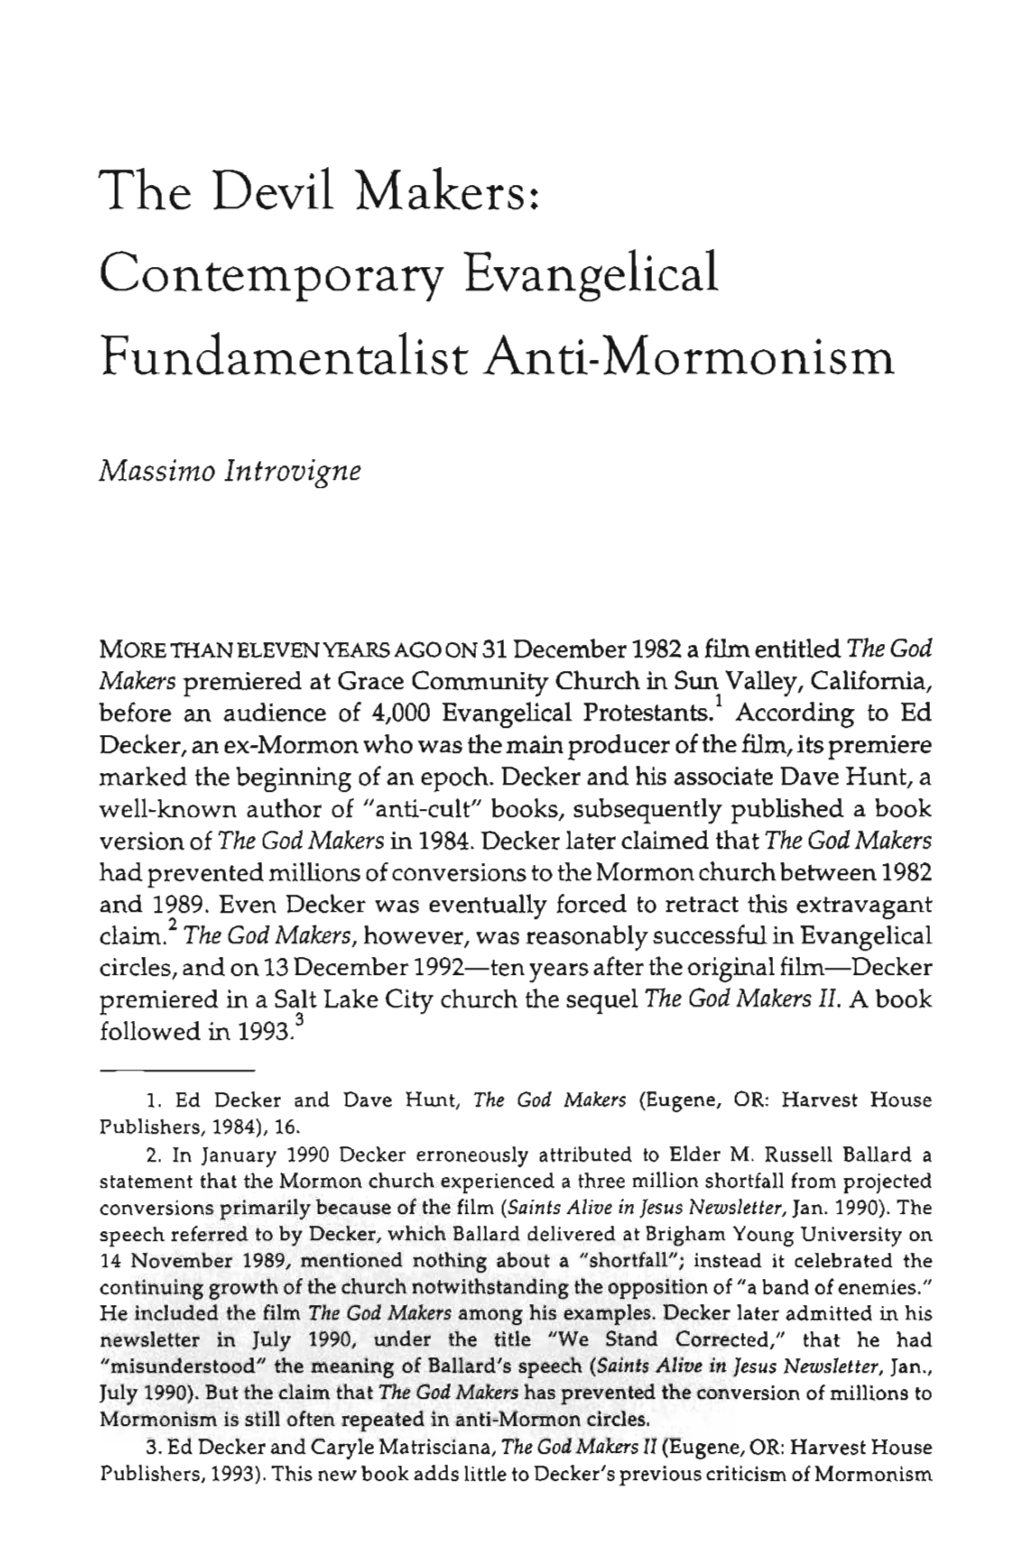 The Devil Makers: Contemporary Evangelical Fundamentalist Anti-Mormonism